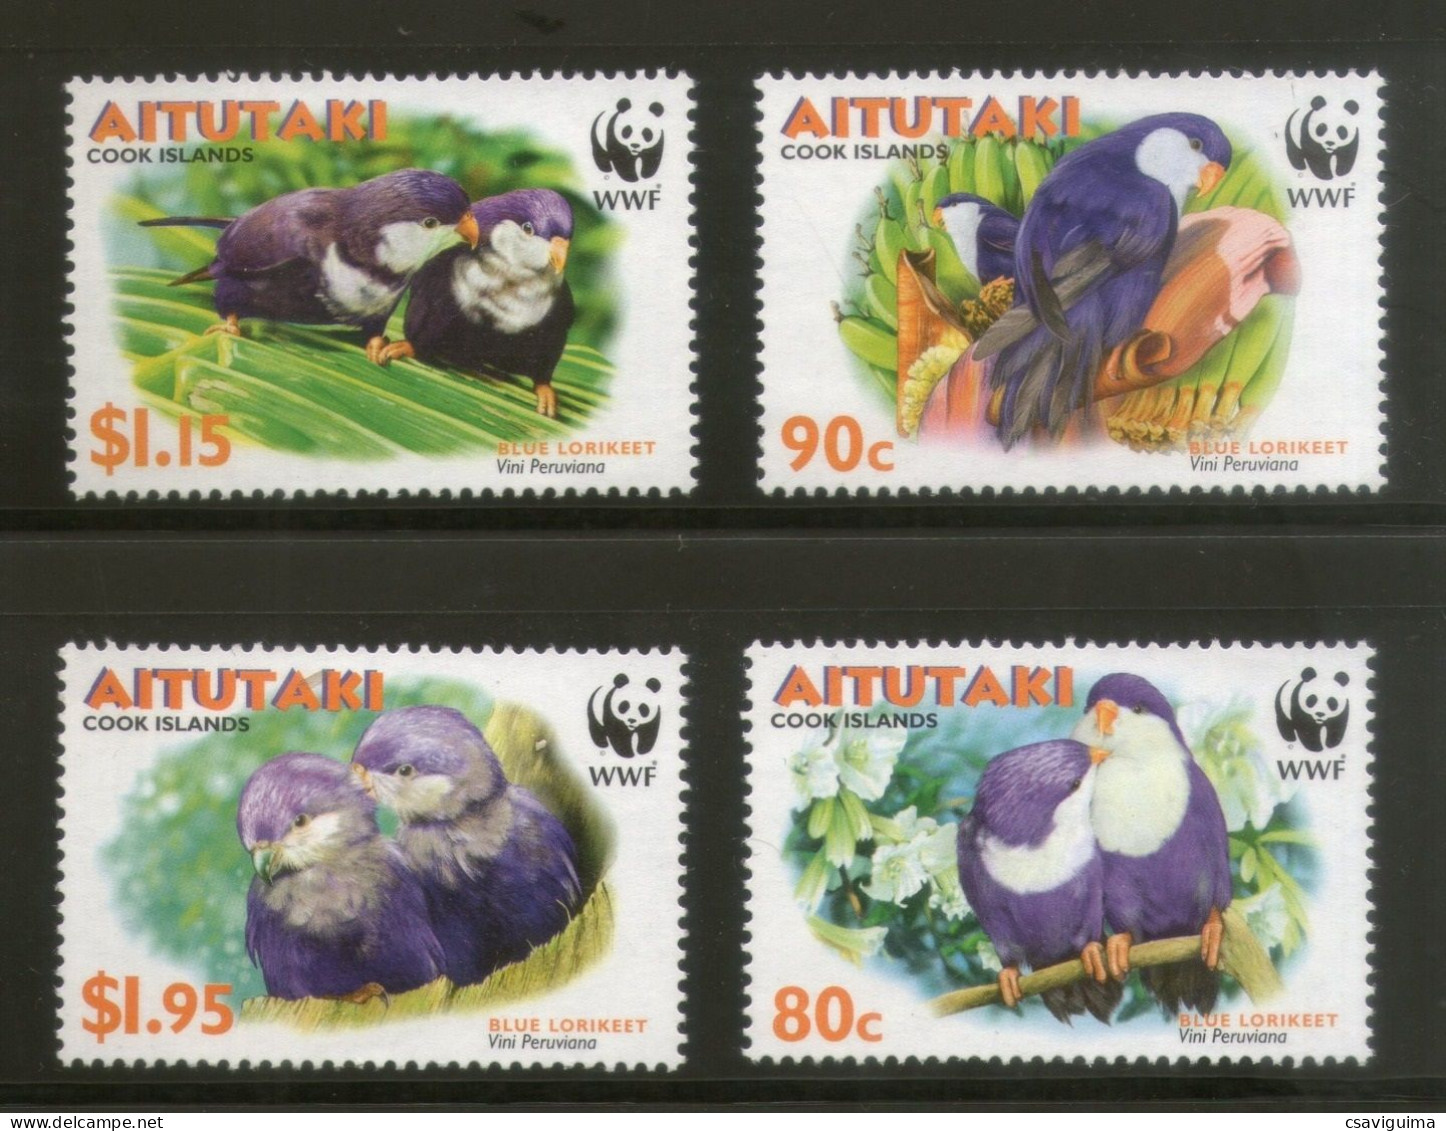 Aitutaki - 2002 - Birds: Parrot, WWF - Yv 589/92 - Papagayos